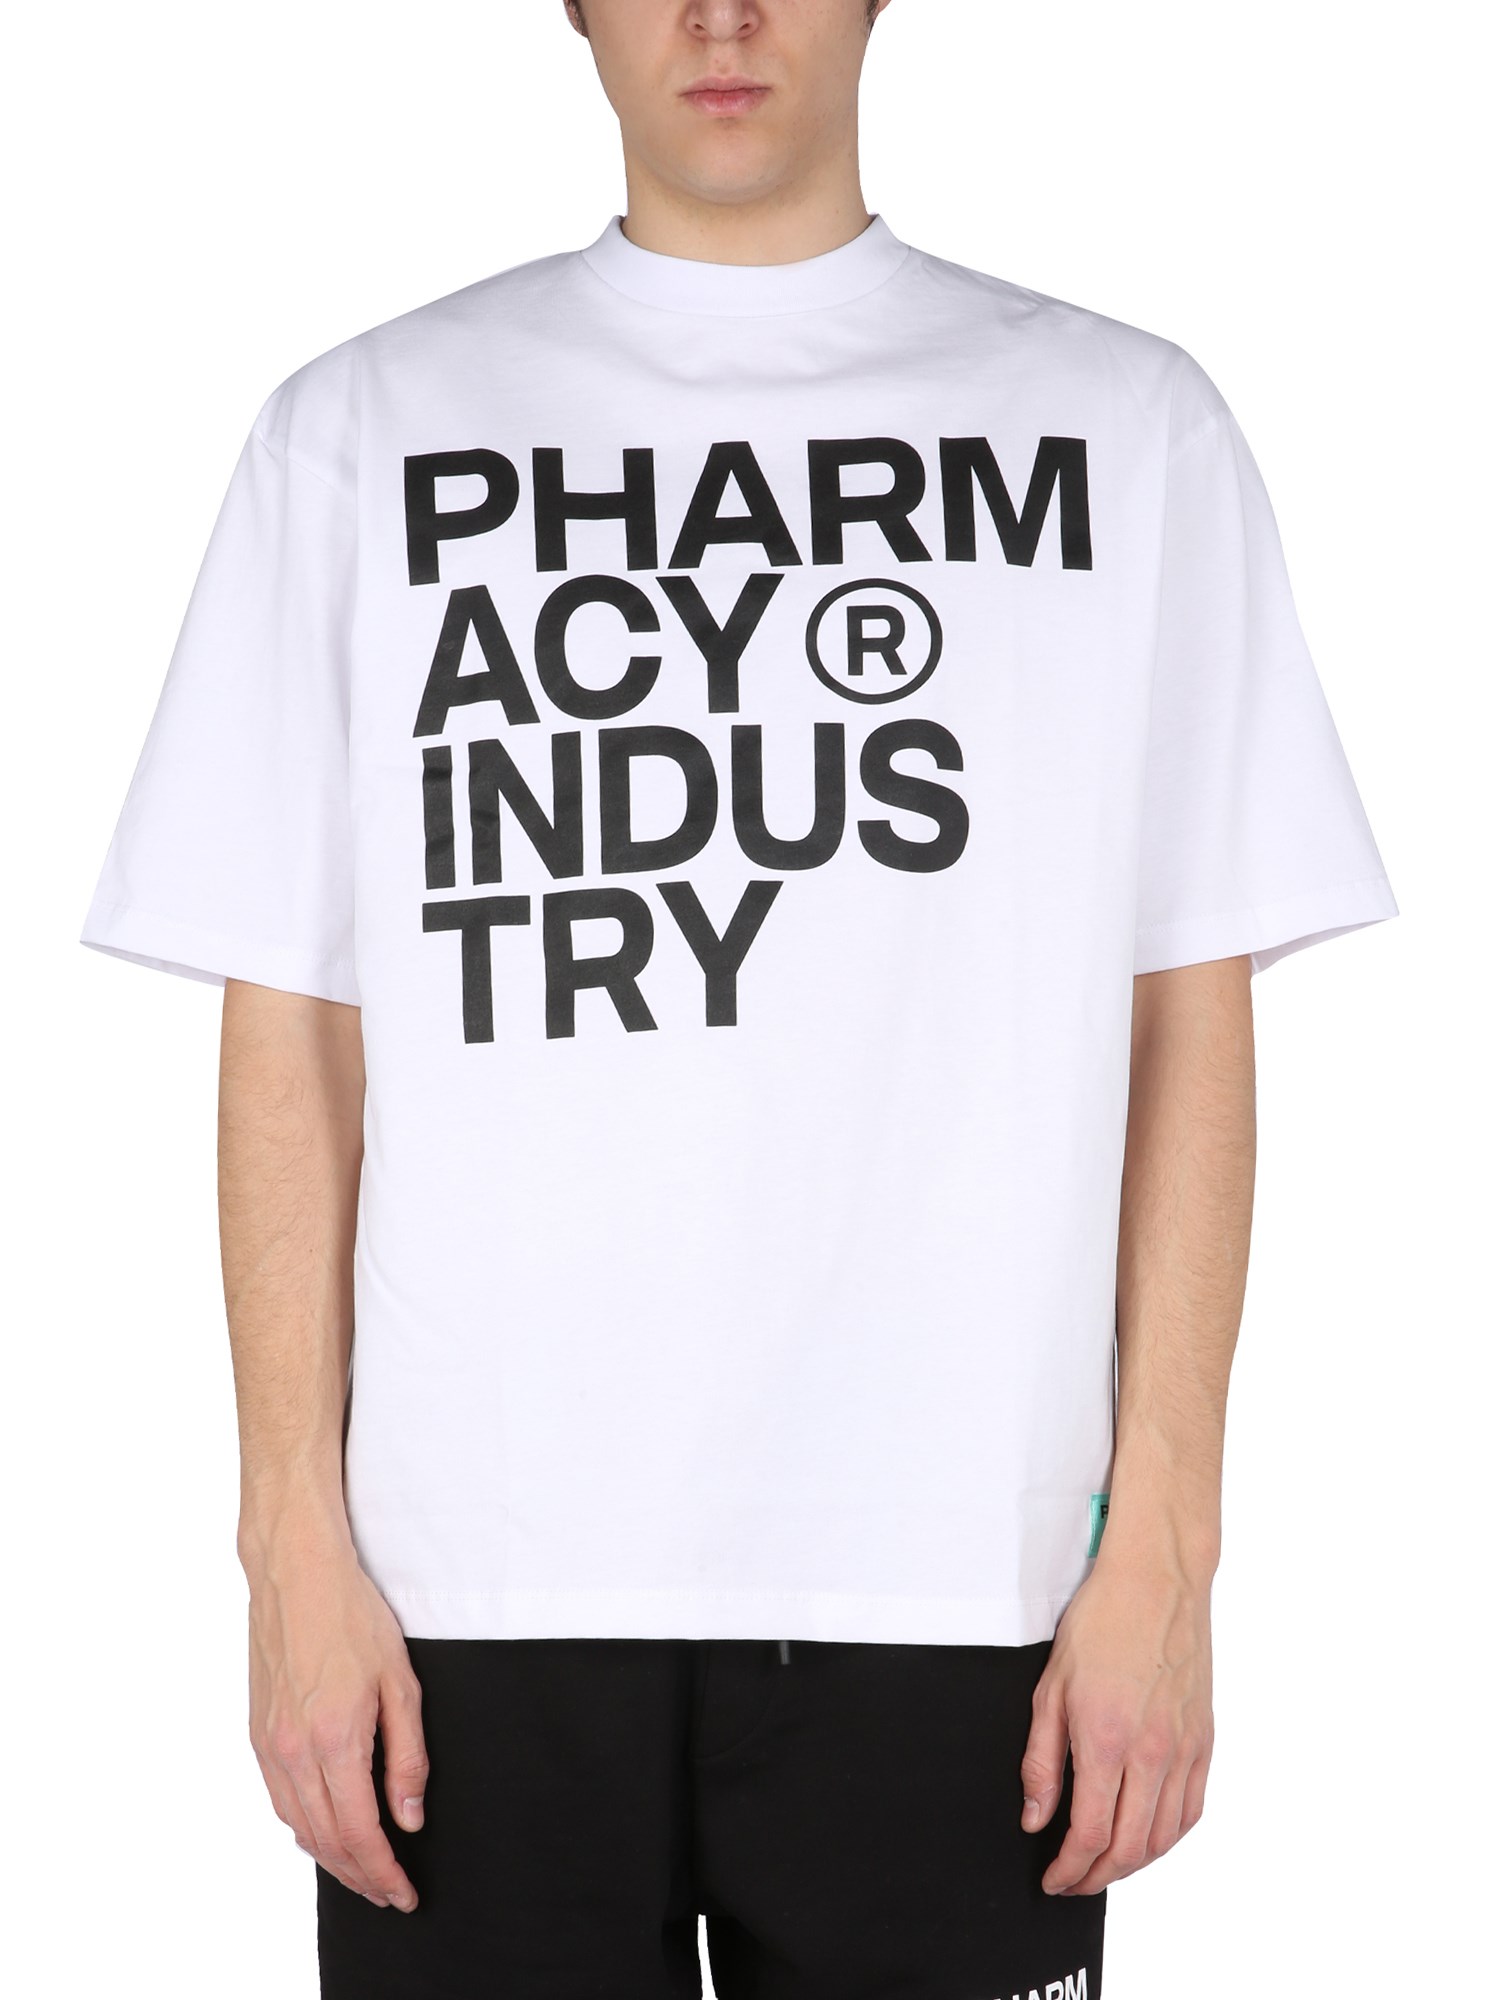 pharmacy industry logo print t-shirt